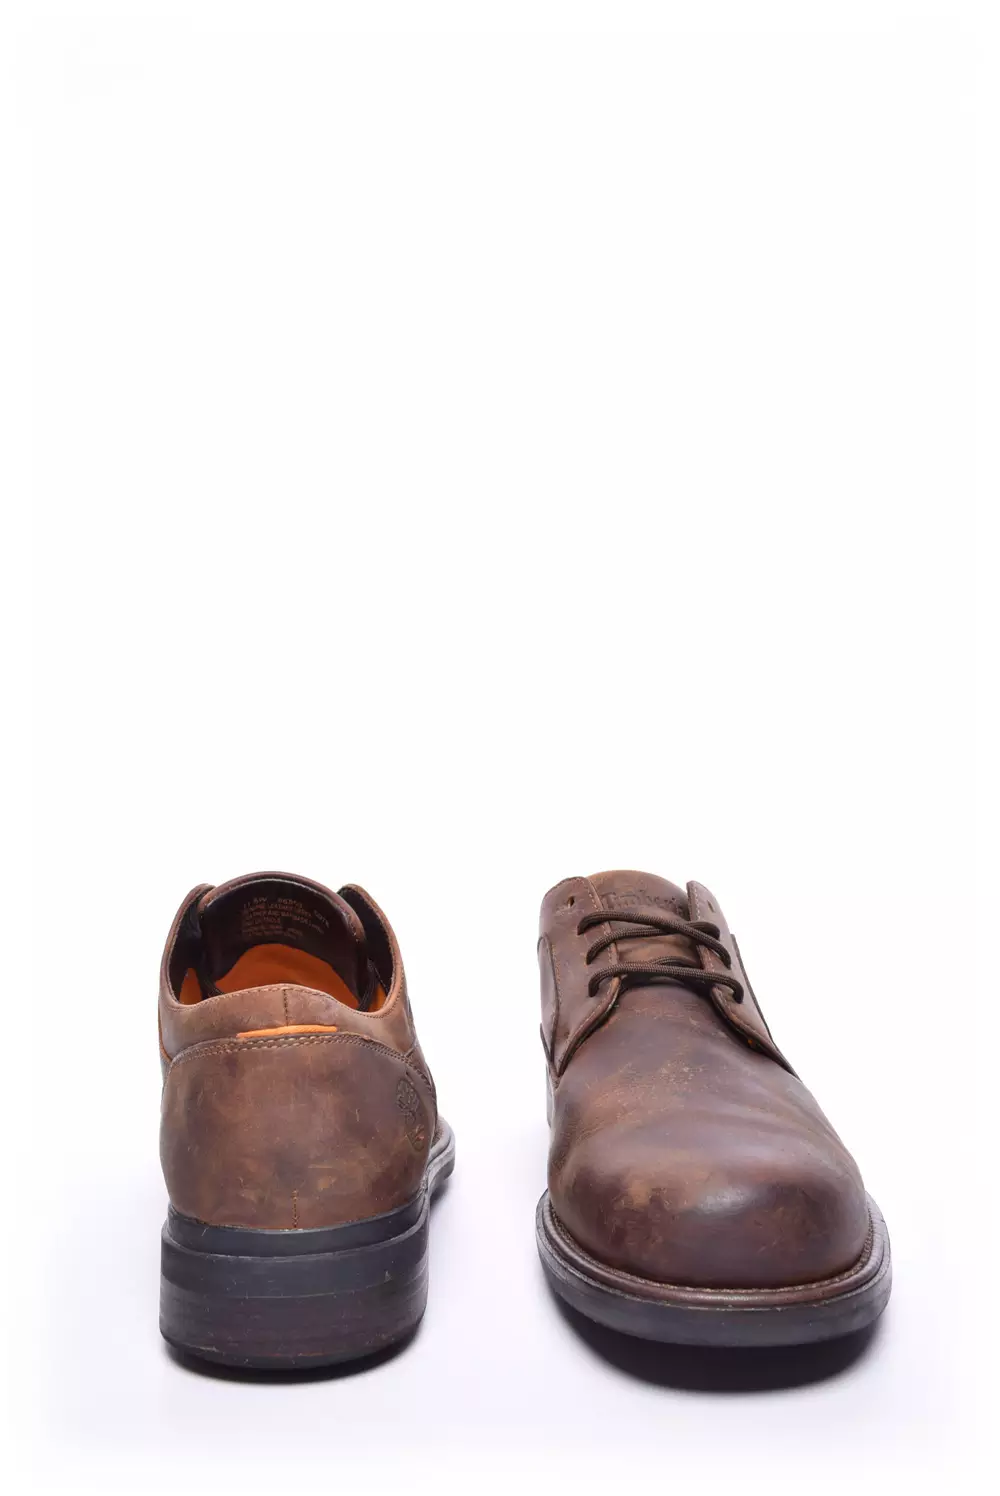 Pantofi barbati impermeabili cu aspect vintage [4]